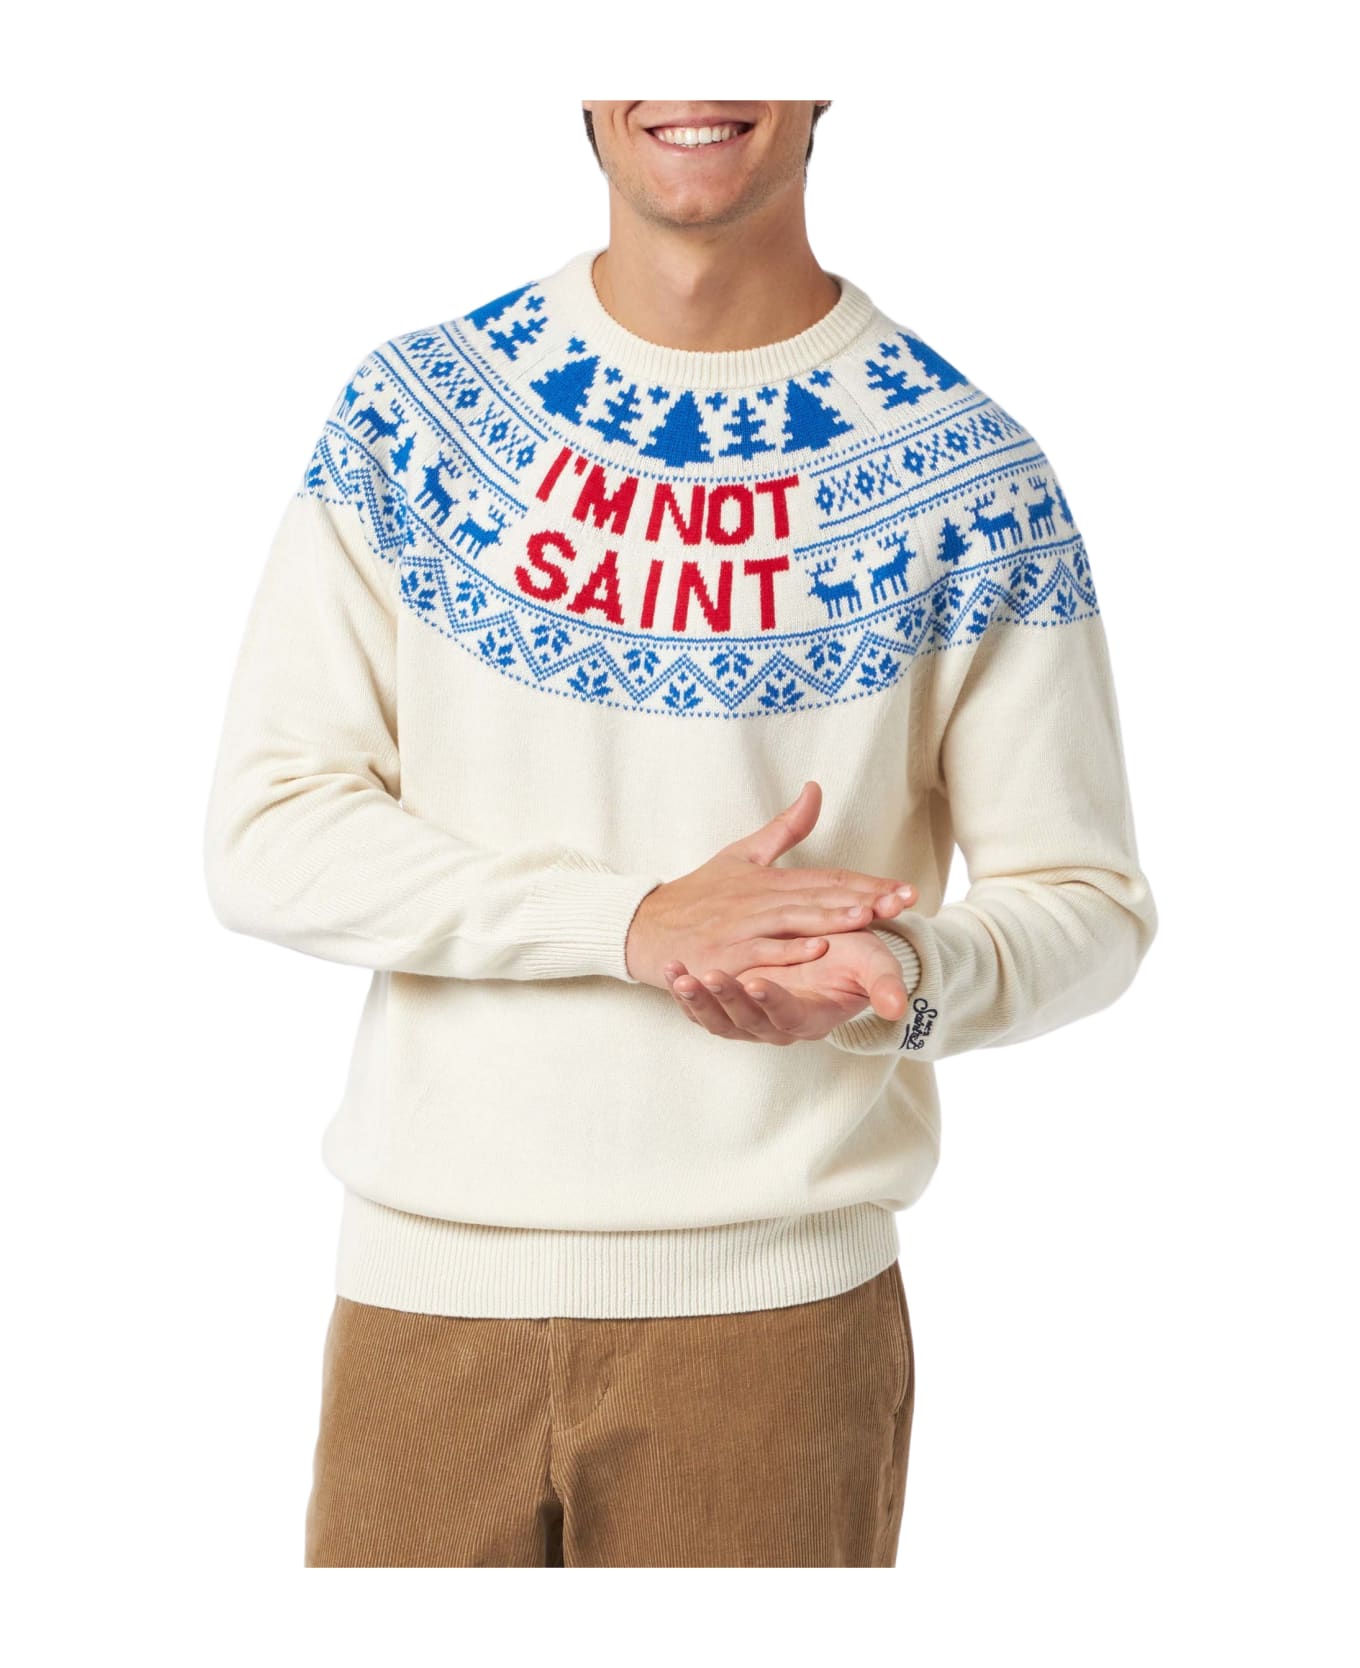 MC2 Saint Barth Man Sweater With I'm Not Saint Lettering - WHITE